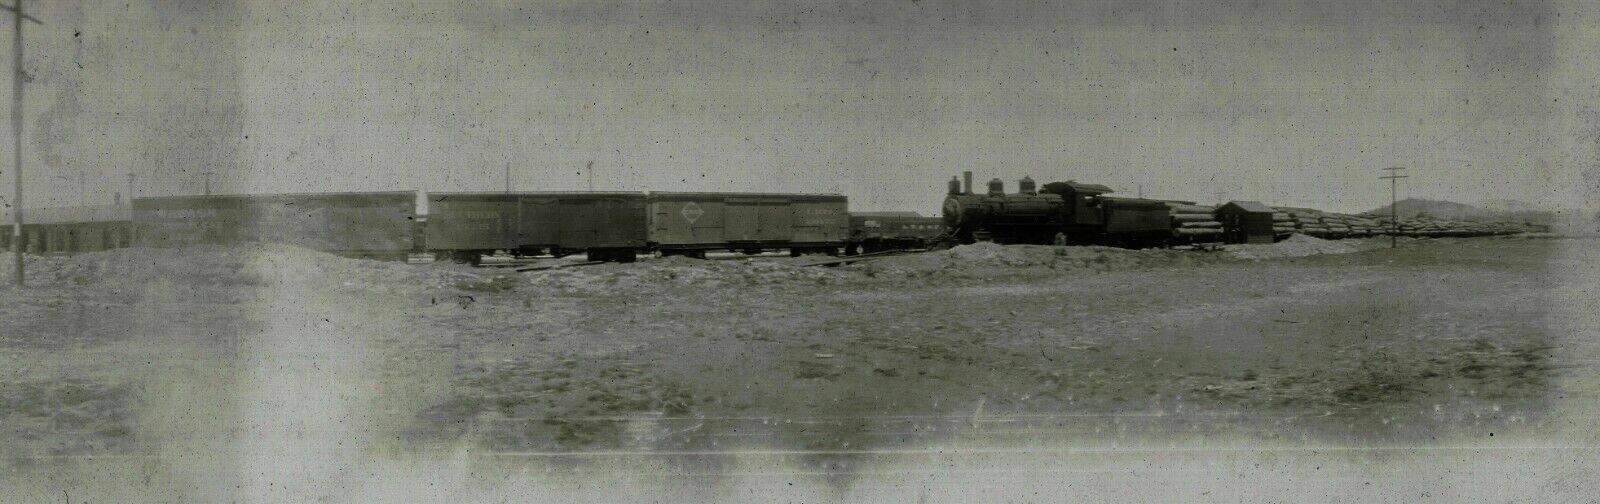 Atchison, Topeka and Santa Fe Lumber Train 1906 Panoramic Negative OOAK  AT&SF